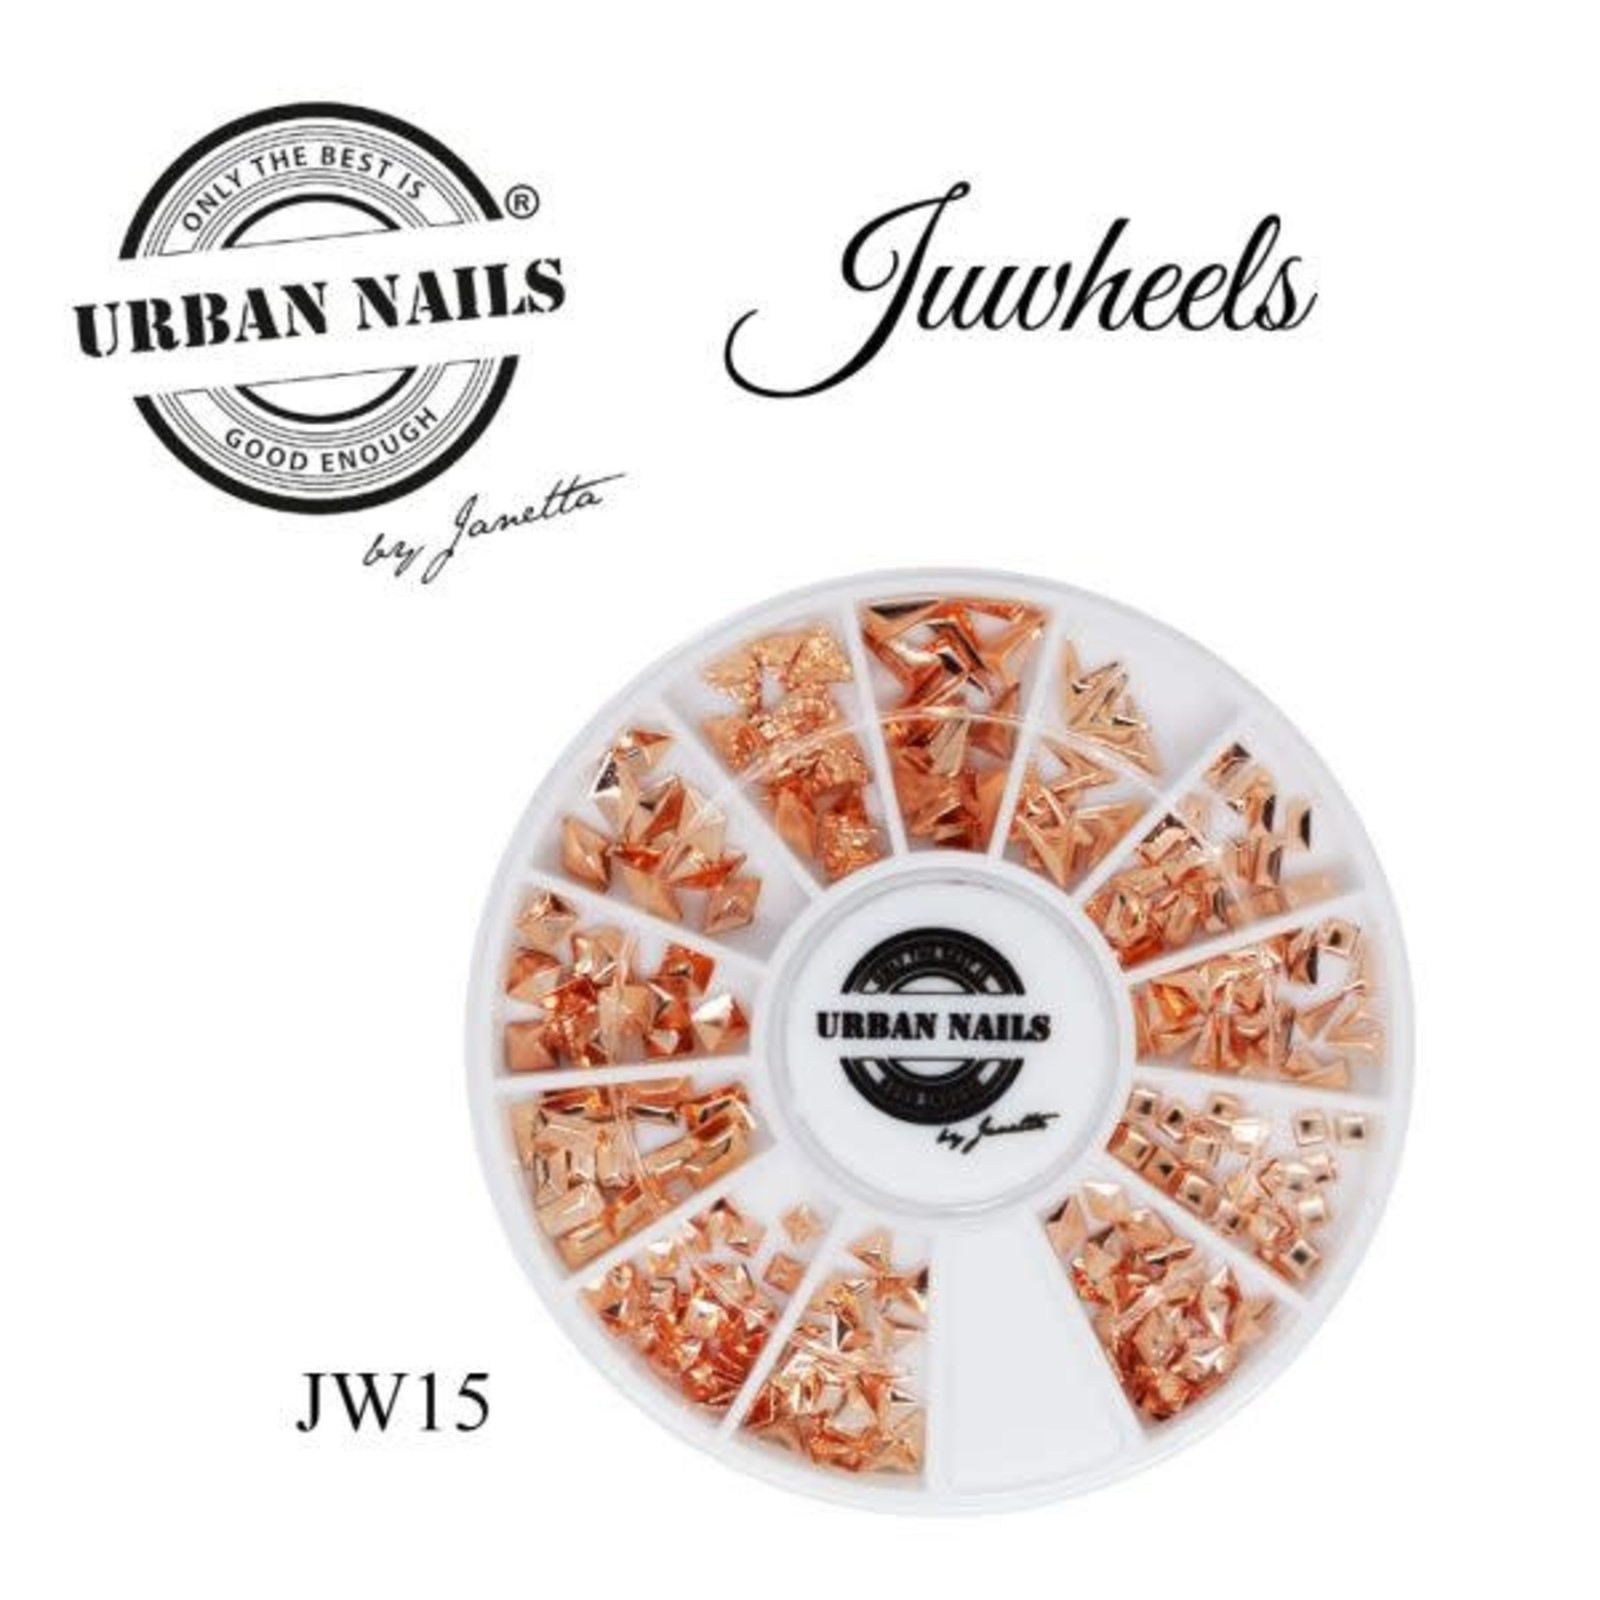 Urban nails Juwheels 15